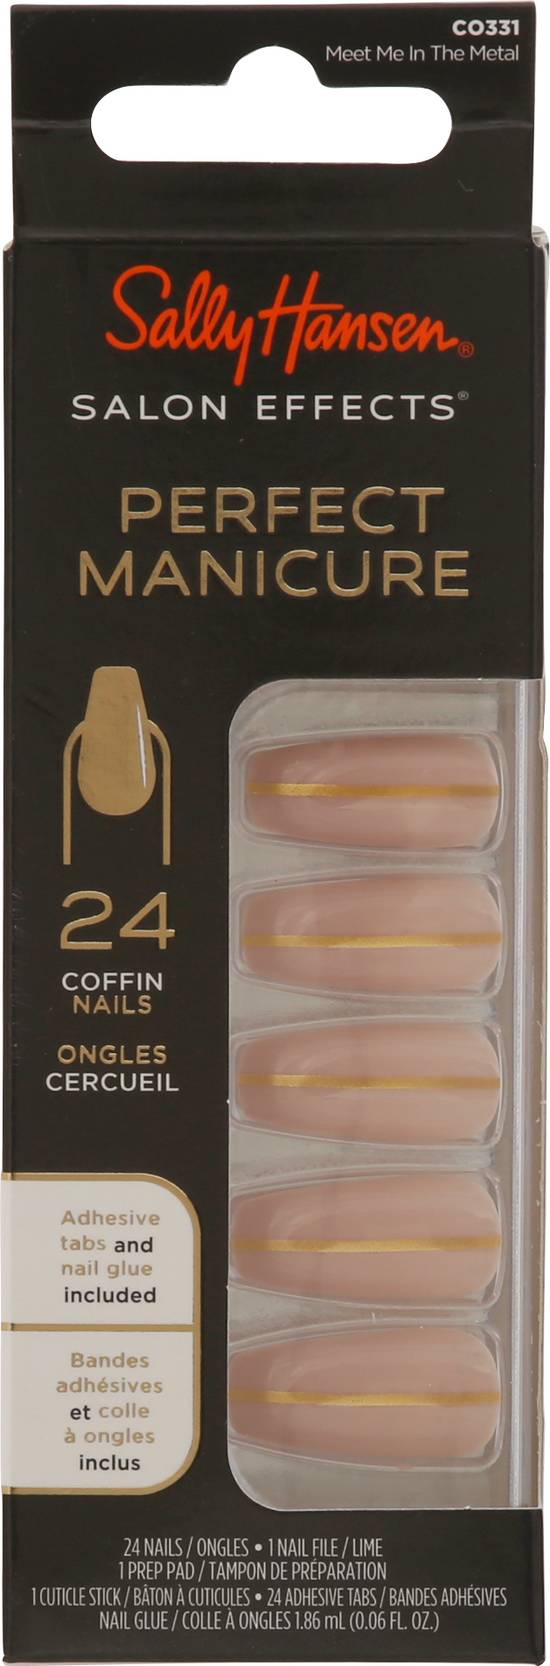 Sally Hansen Salon Effects Perfect Manicure Coffin Nails Kit